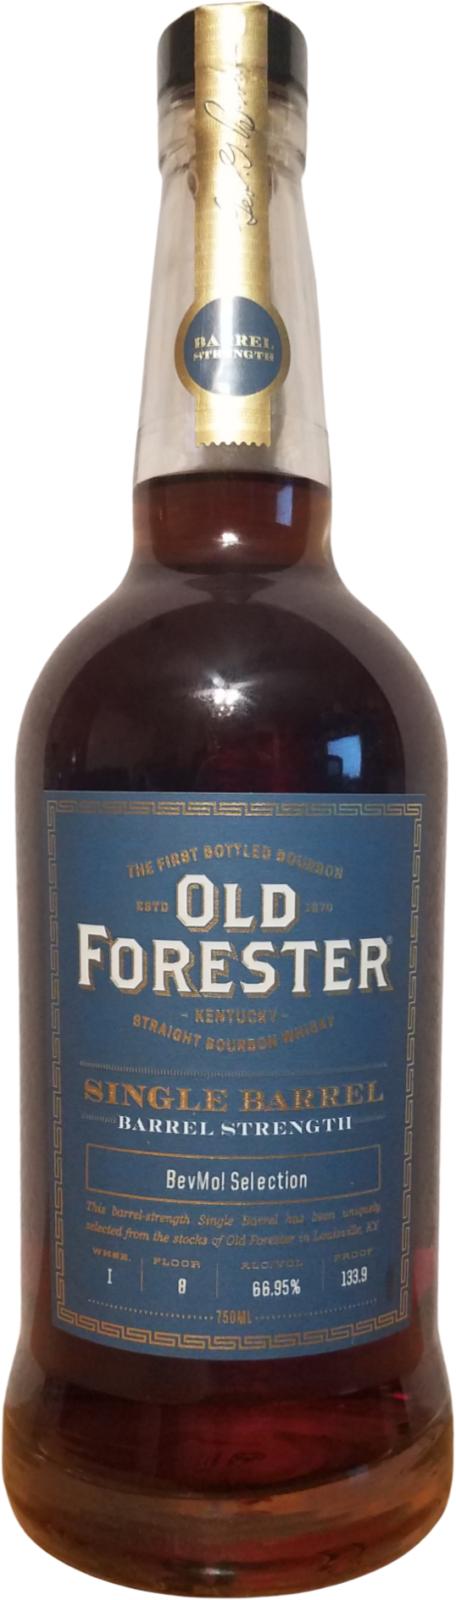 Old Forester Single Barrel Charred New American Oak Barrel Beverages and More 66.95% 750ml